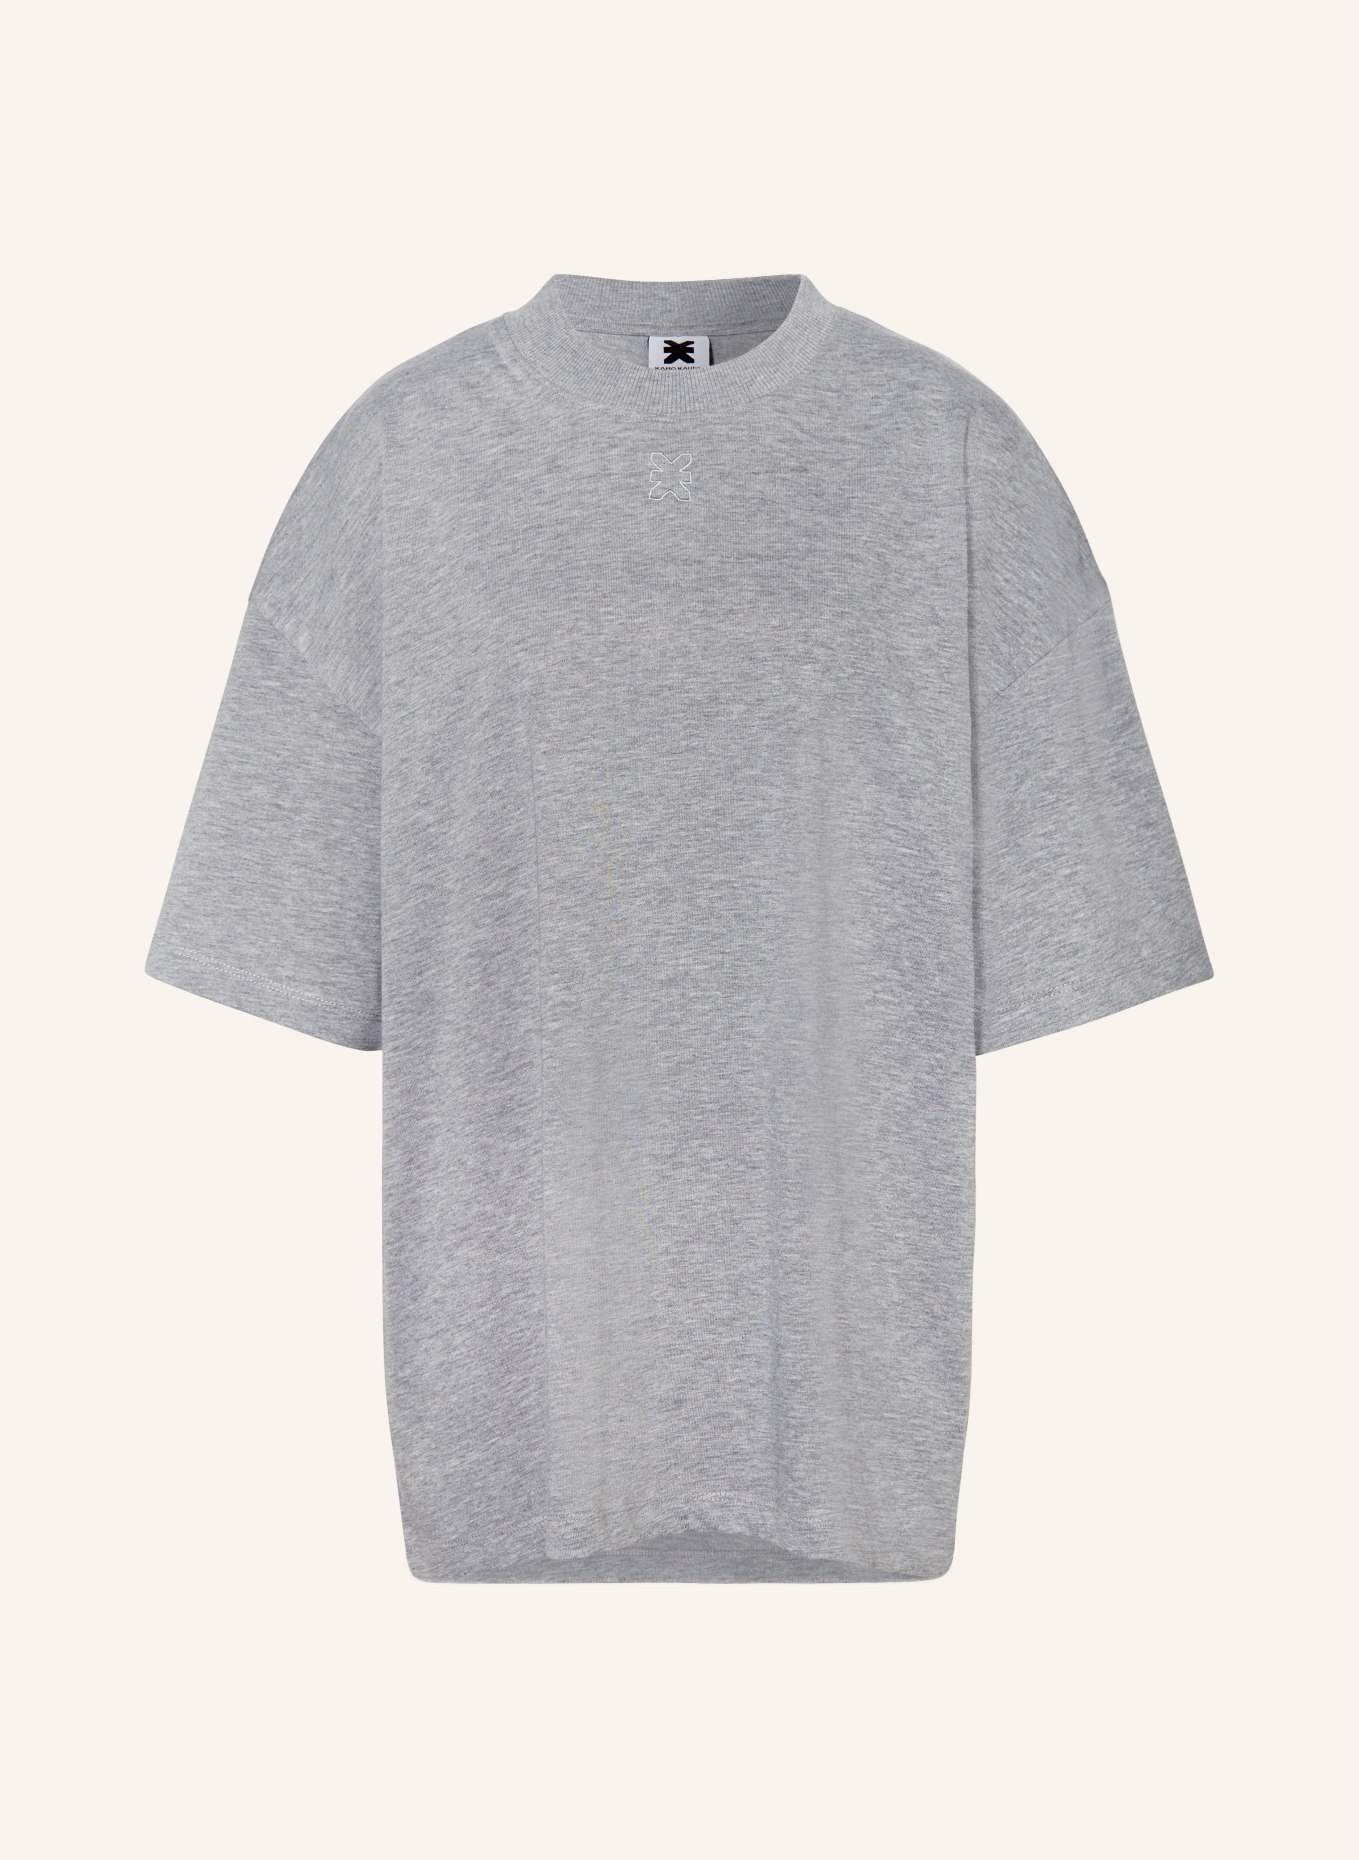 KARO KAUER Oversized-Shirt, Farbe: GRAU (Bild 1)